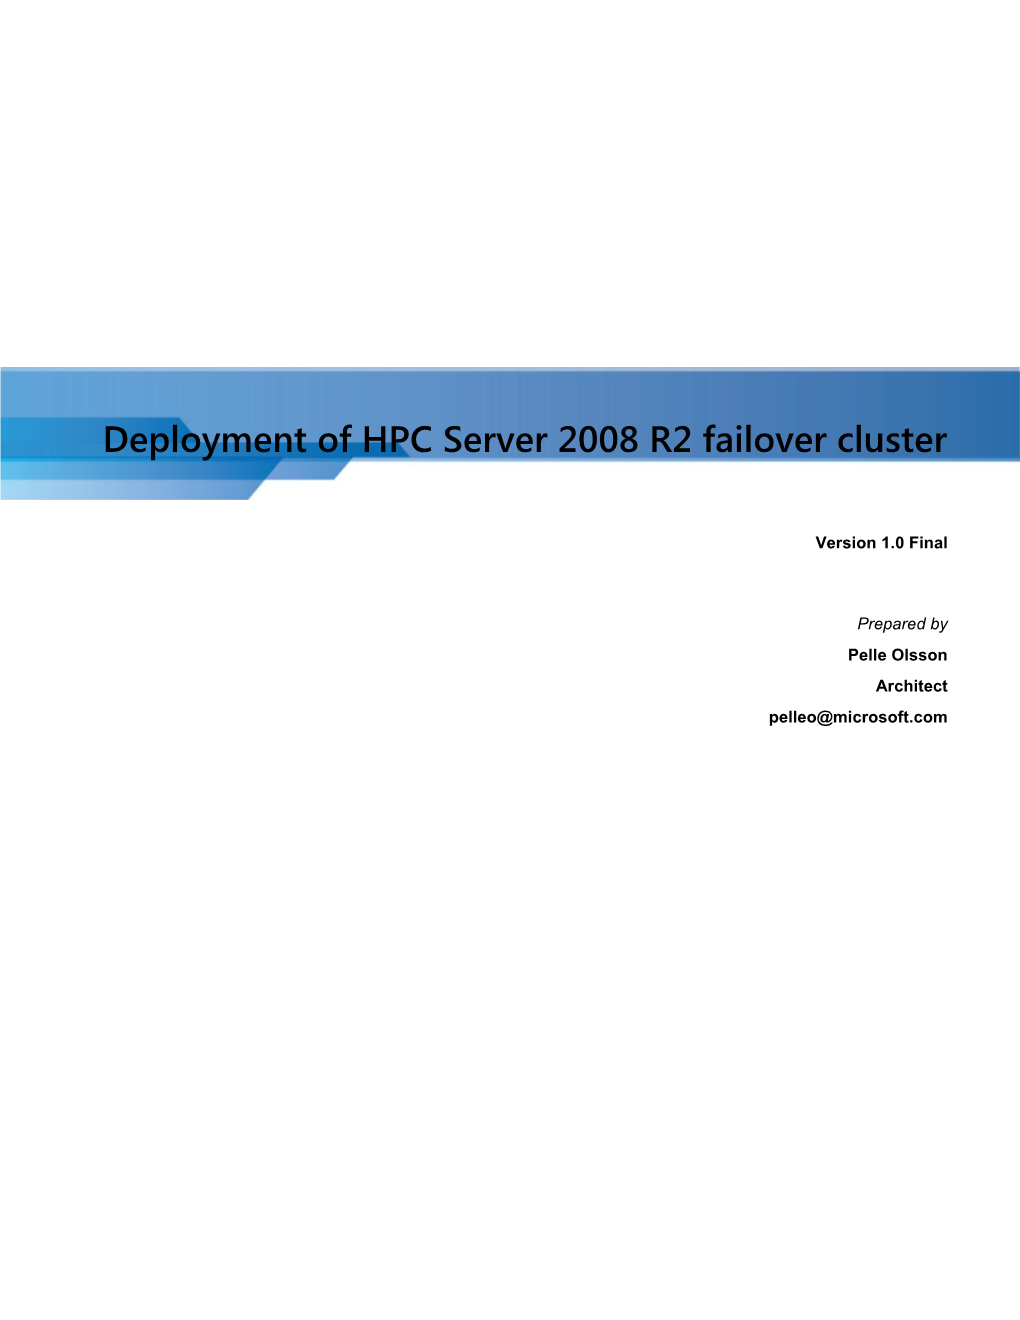 Deployment of HPC Server 2008 R2 Failover Cluster